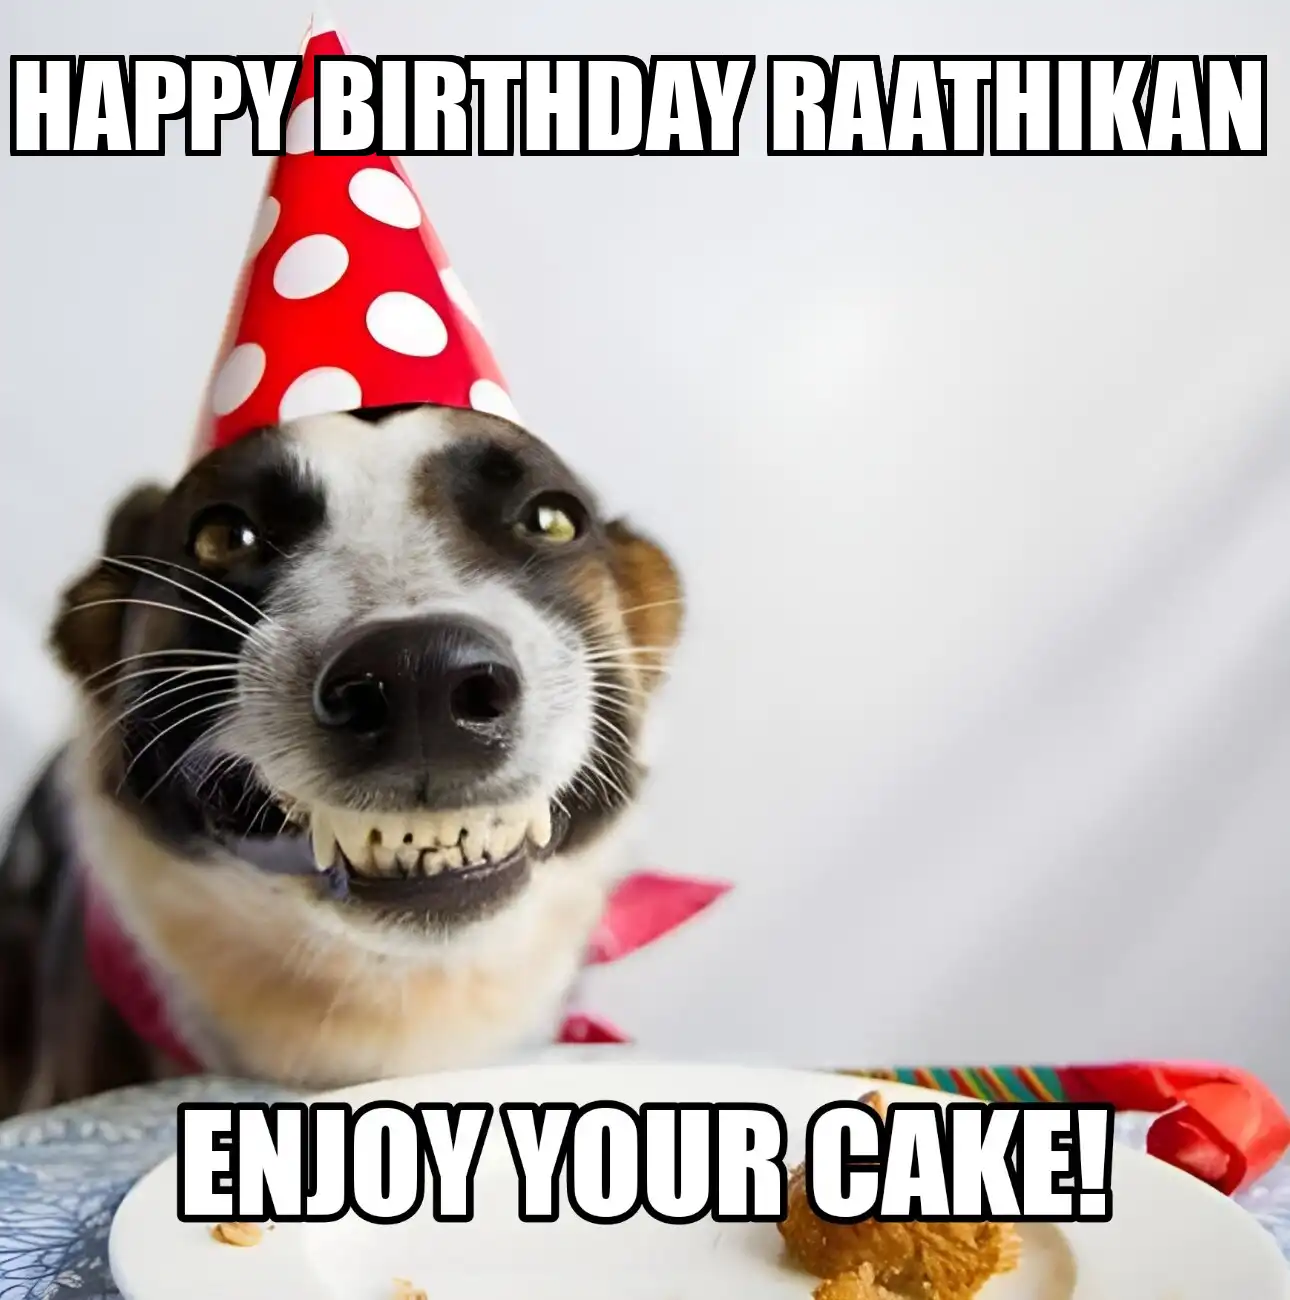 Happy Birthday Raathikan Enjoy Your Cake Dog Meme